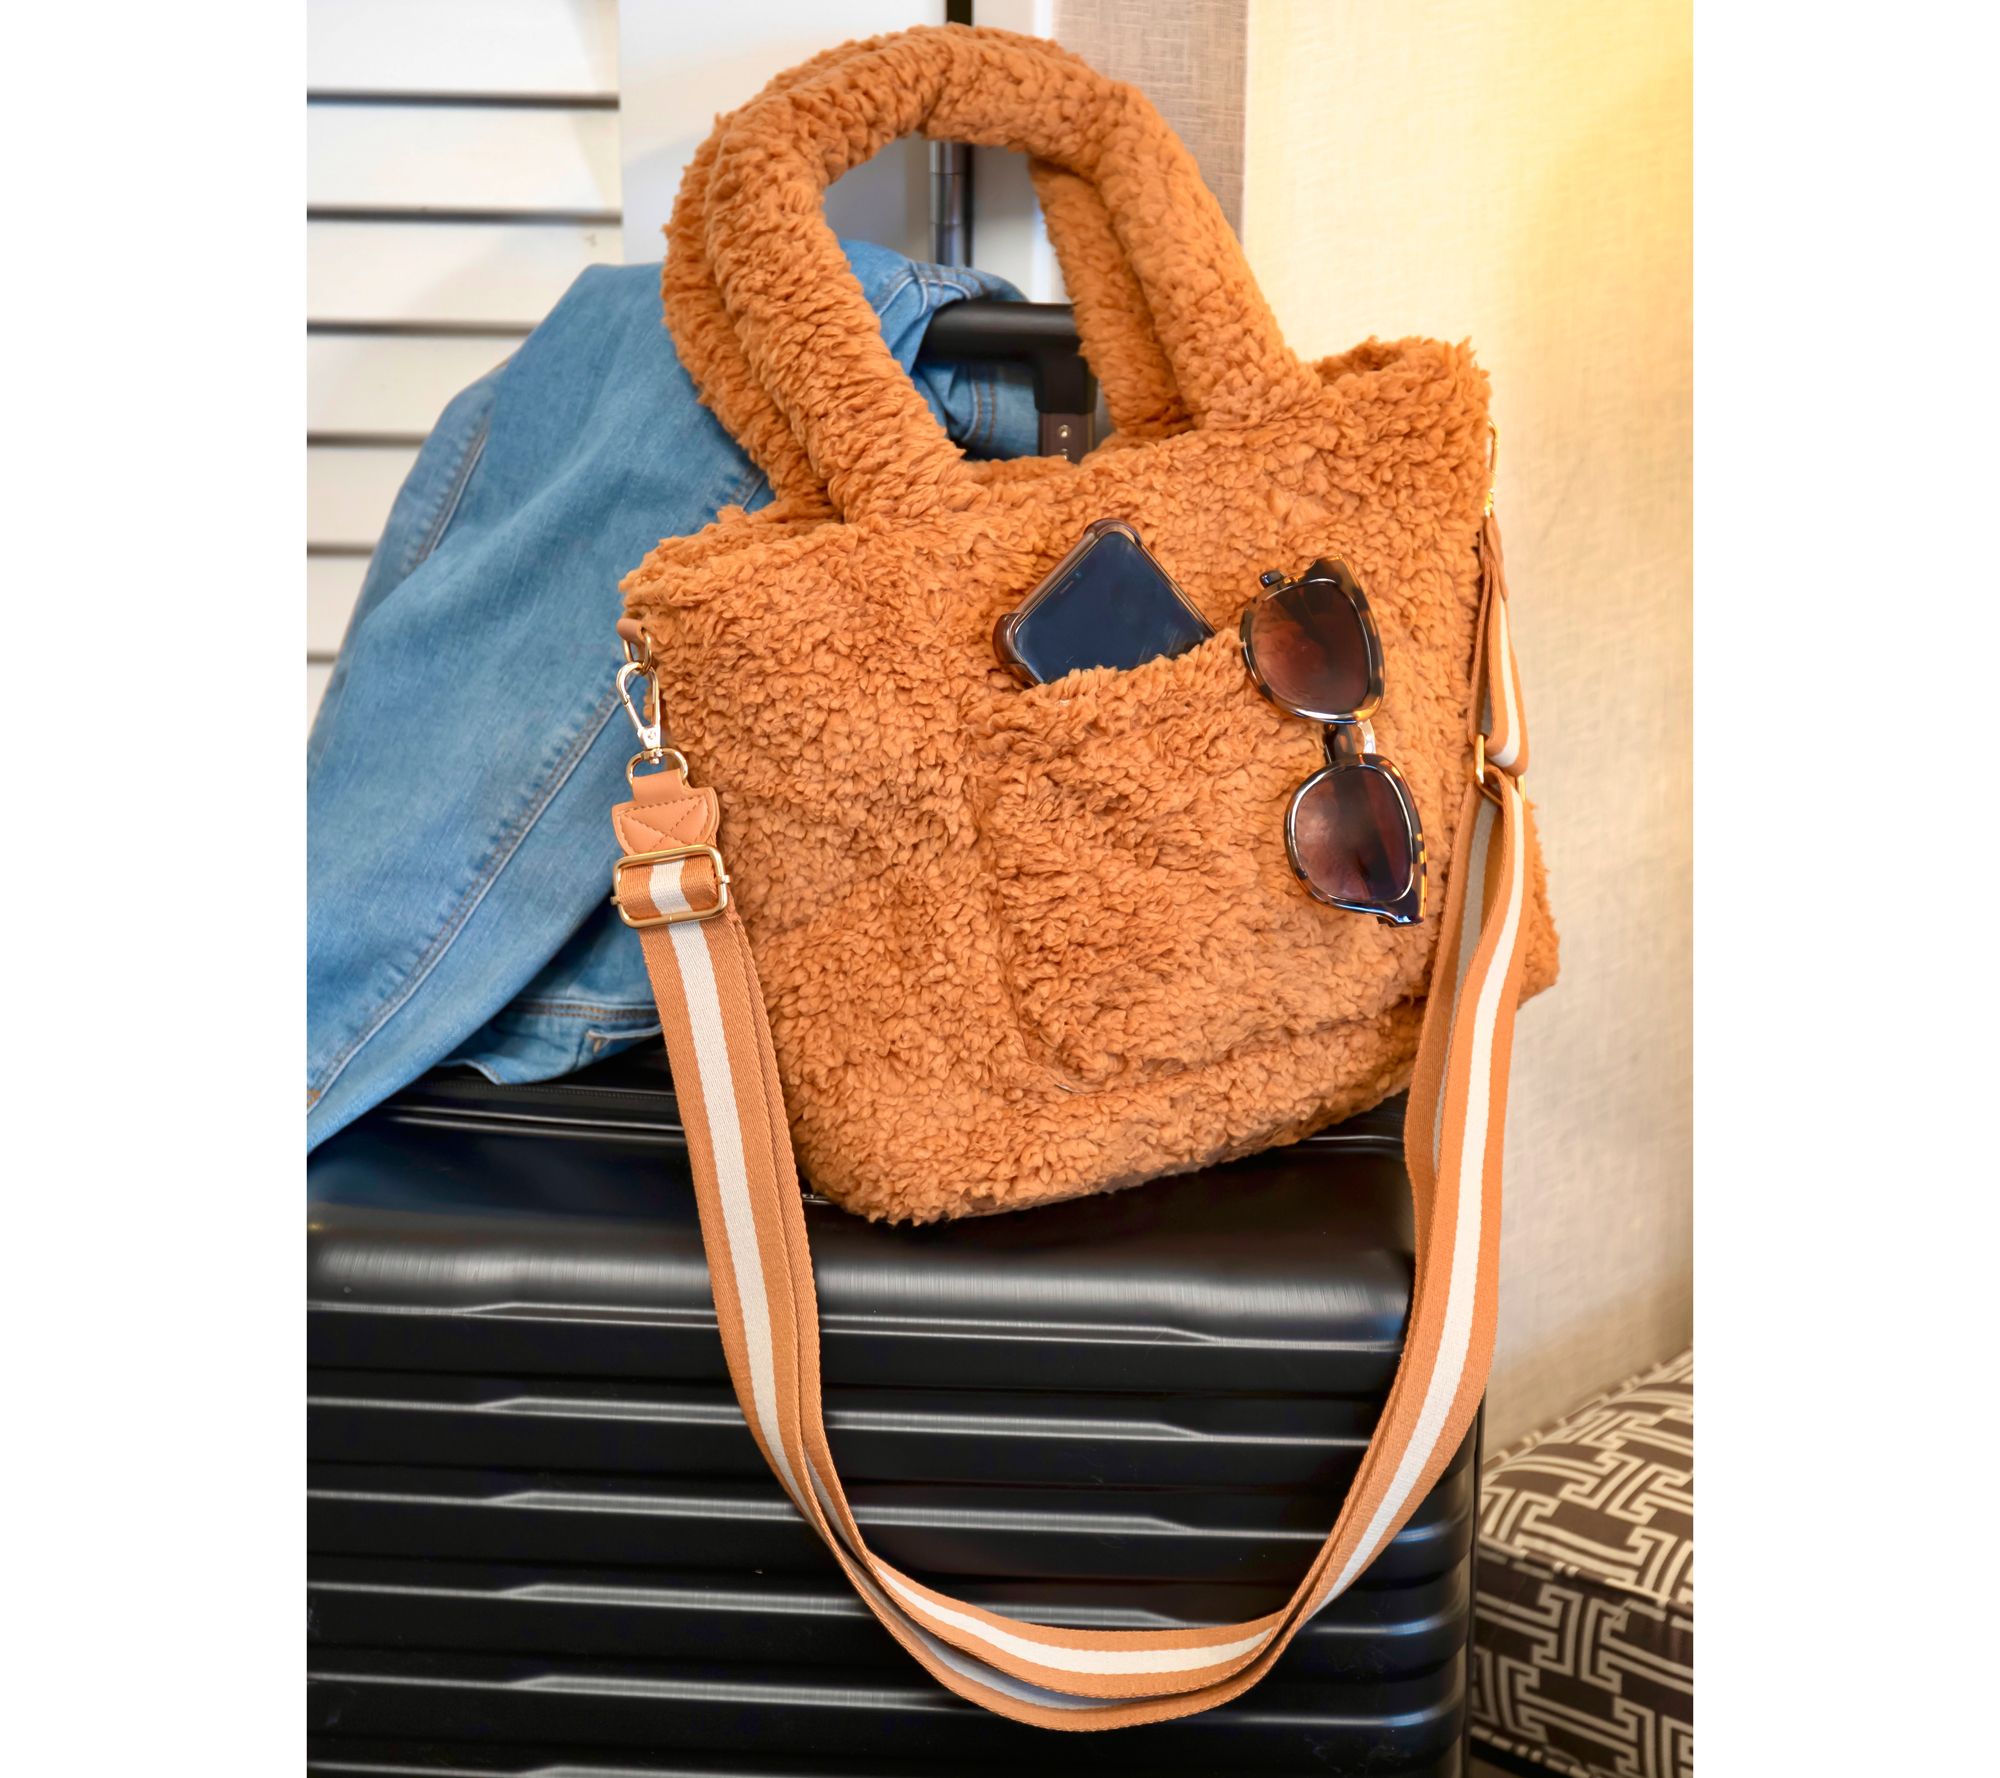 CYHTWSDJ Women's Cute Hobo Tote Handbag